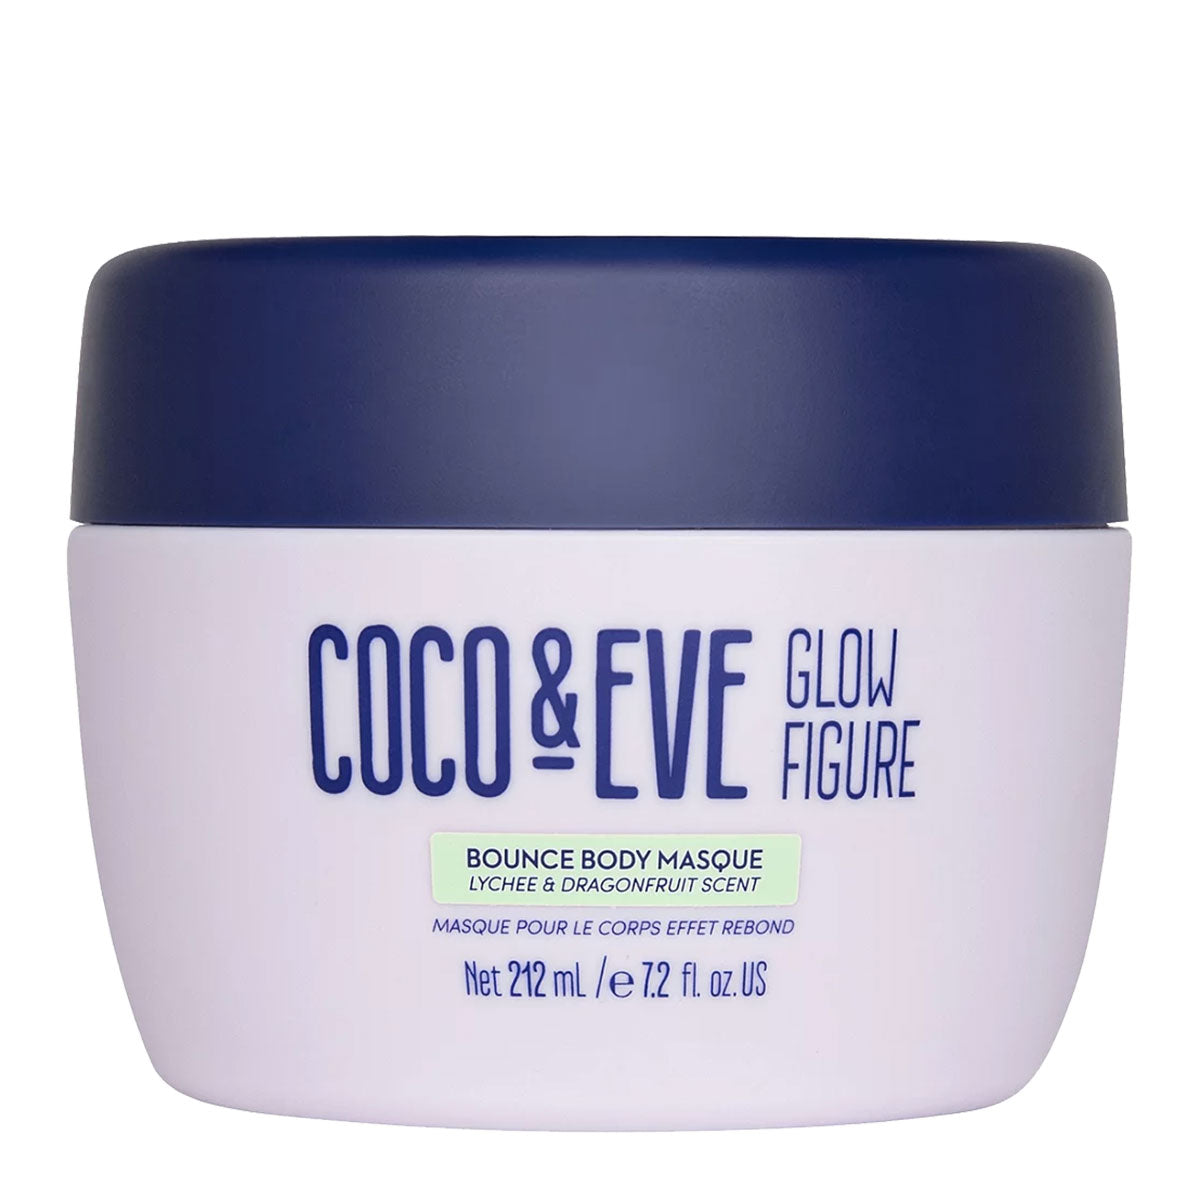 [08/23] Coco & Eve Glow Figure Bounce Body Masque 212 ml